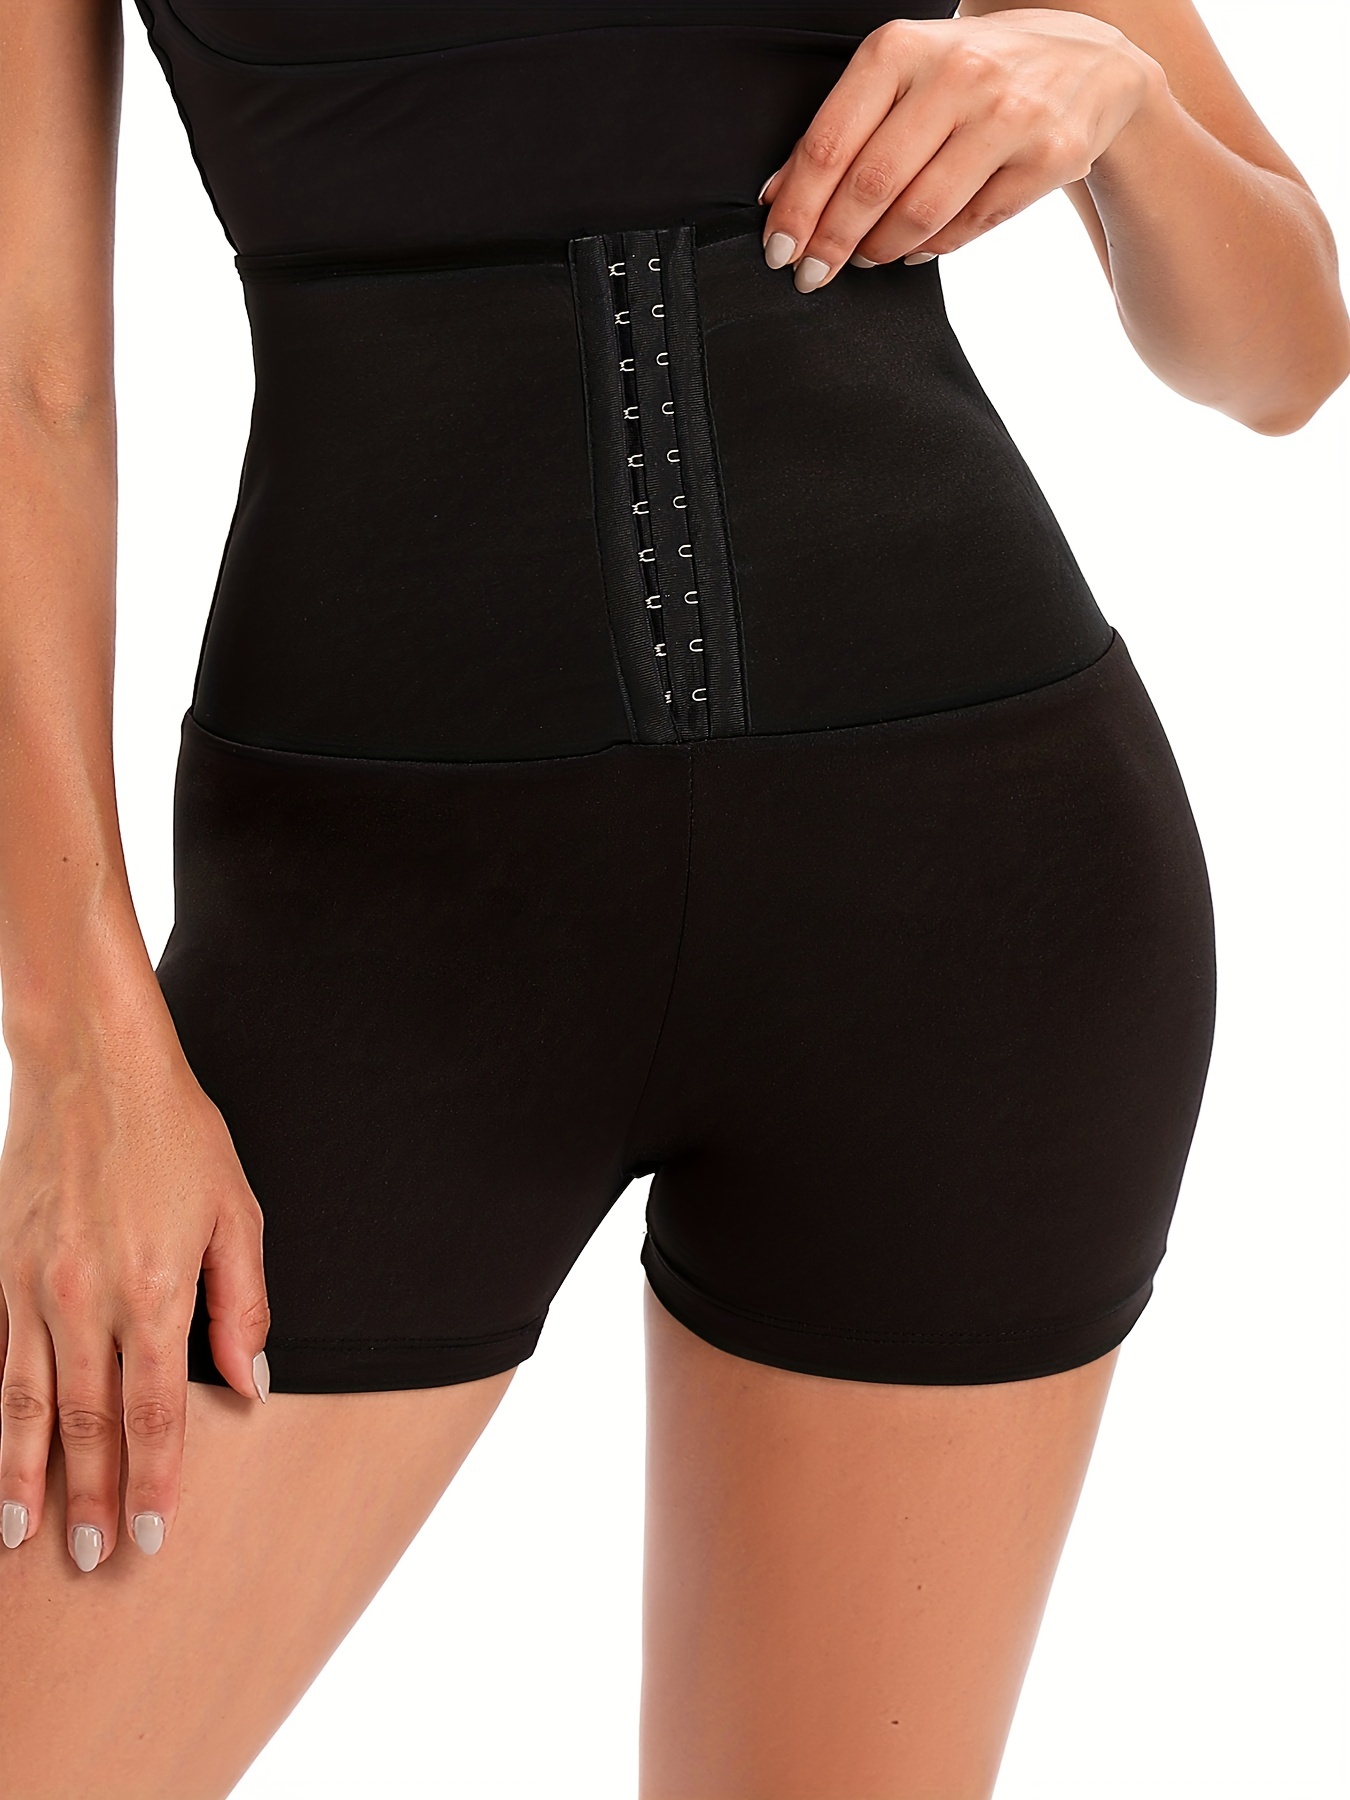 Lolmot Tummy Control Panties for Women with Hooks, Adjustable Waist Trainer Body  Shaper Underwear Hip Enhancer 